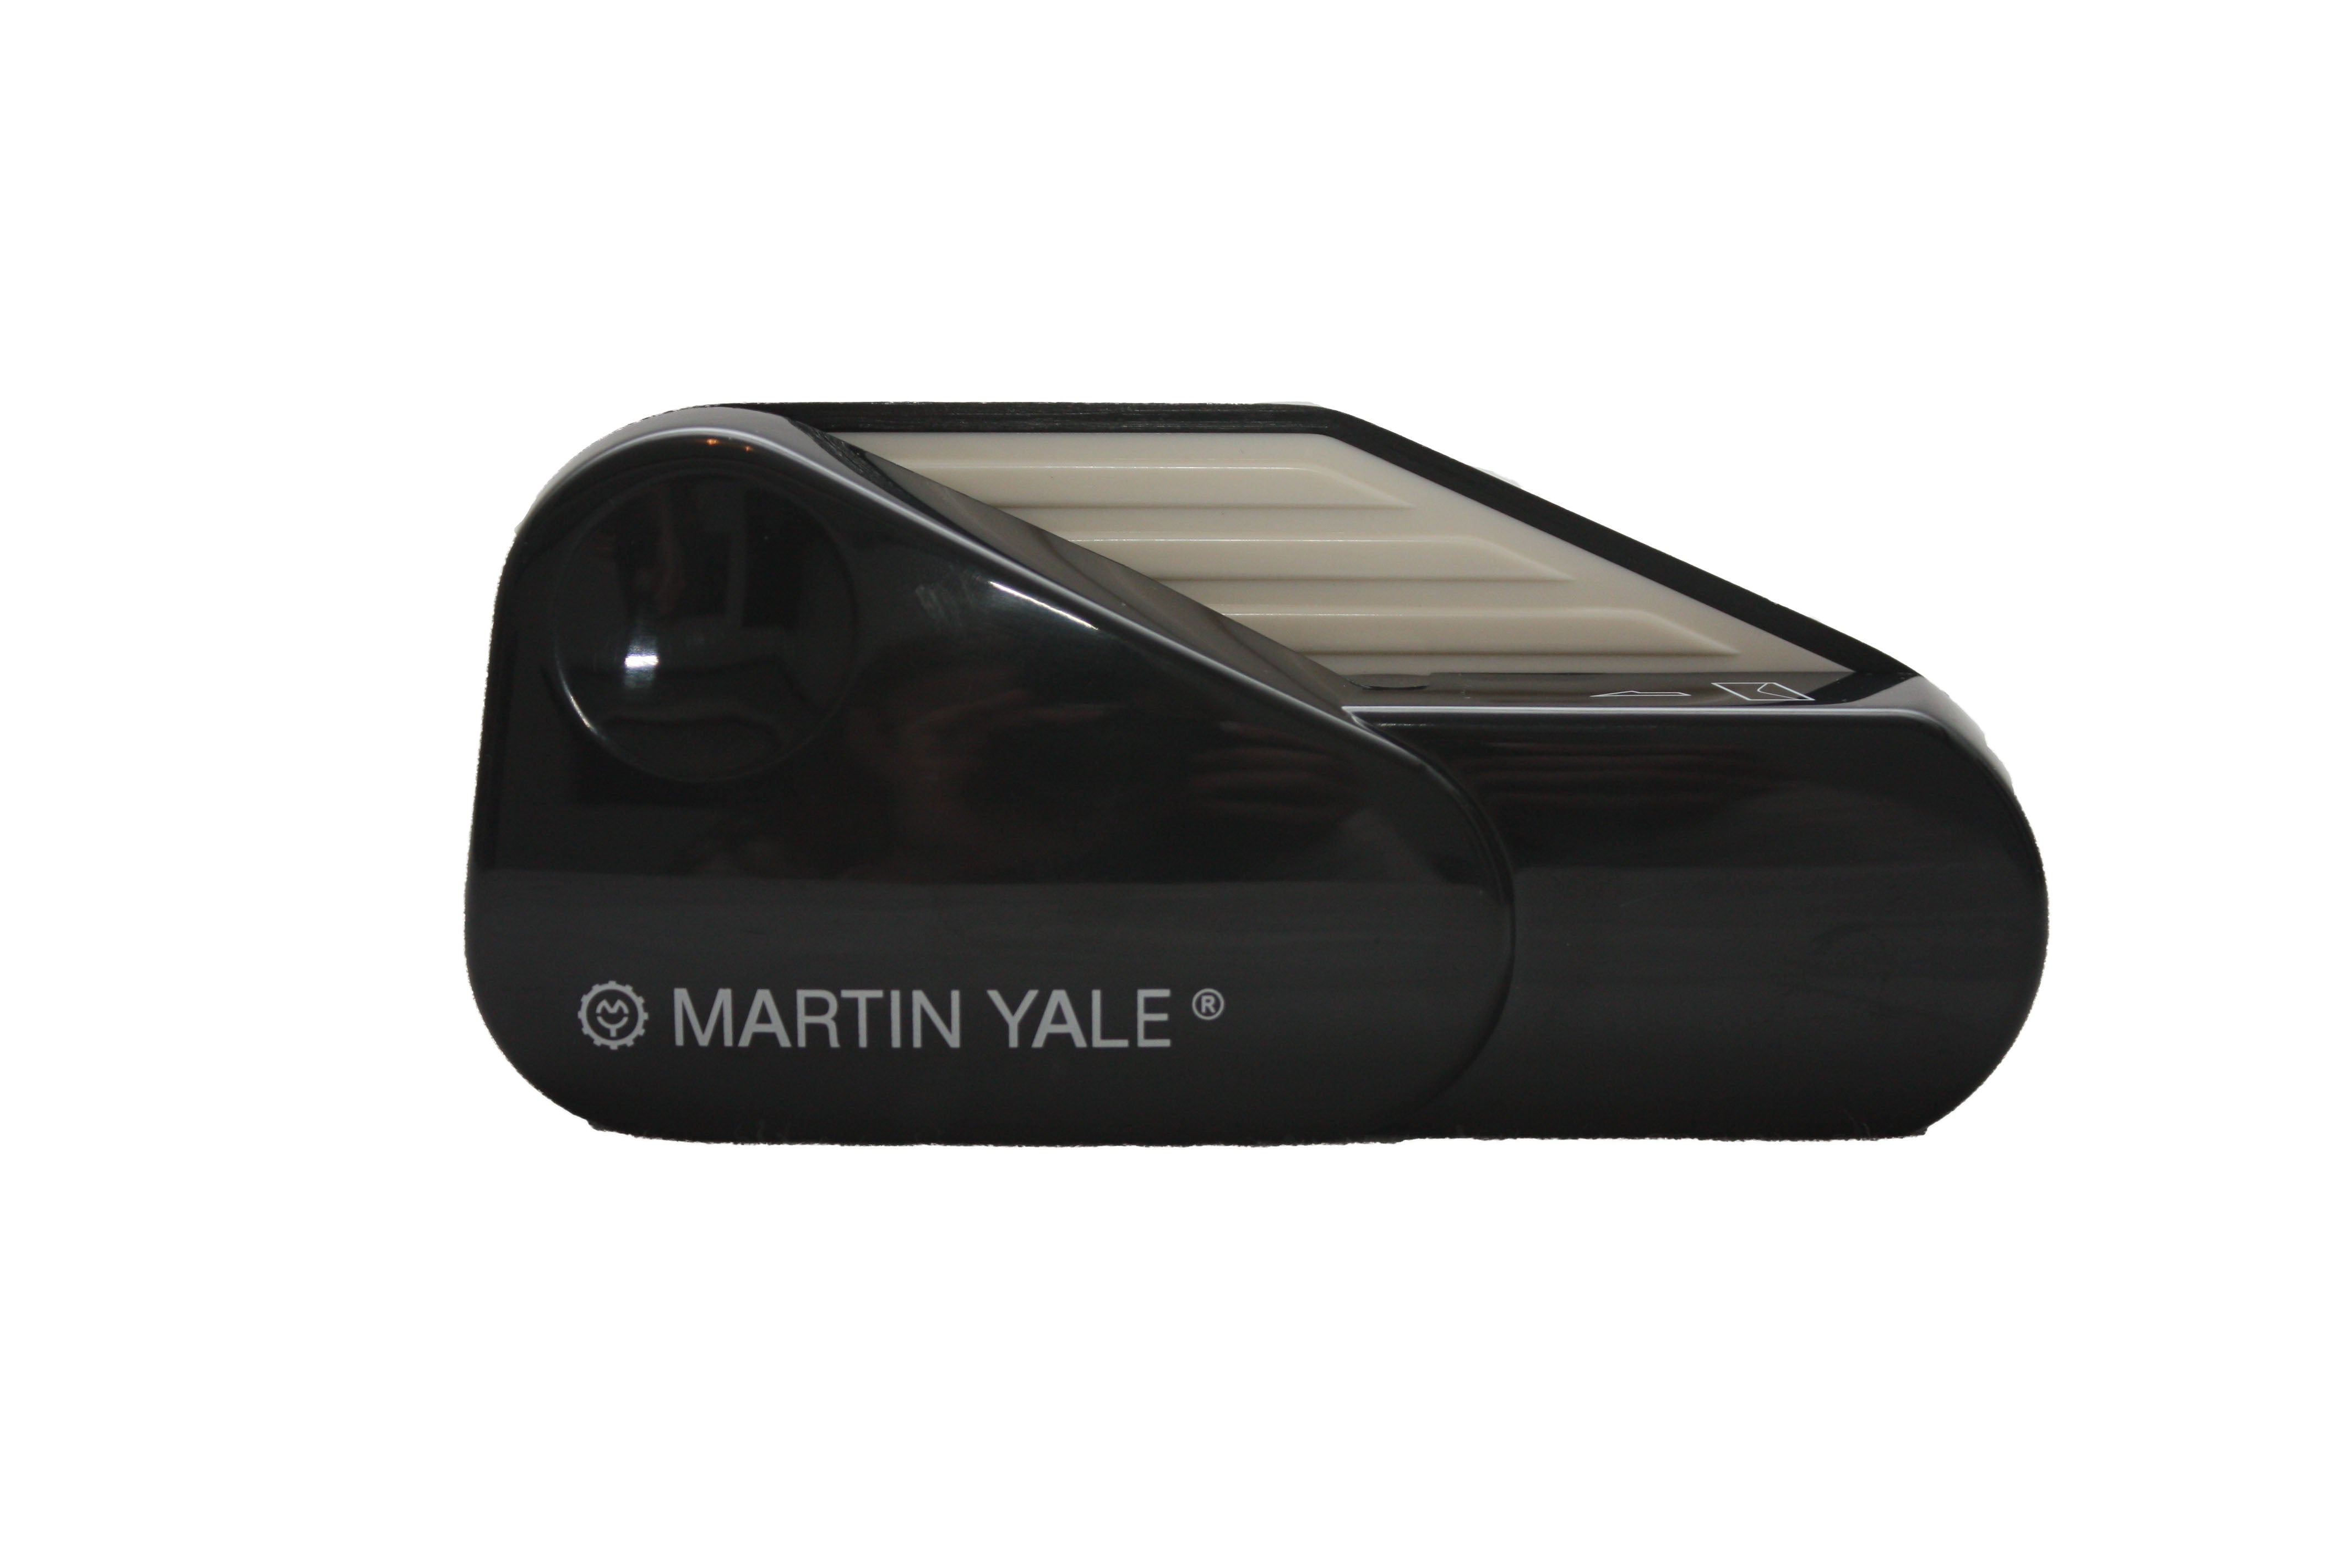 Buy Martin Yale 1616 Letter Opener Machine Online